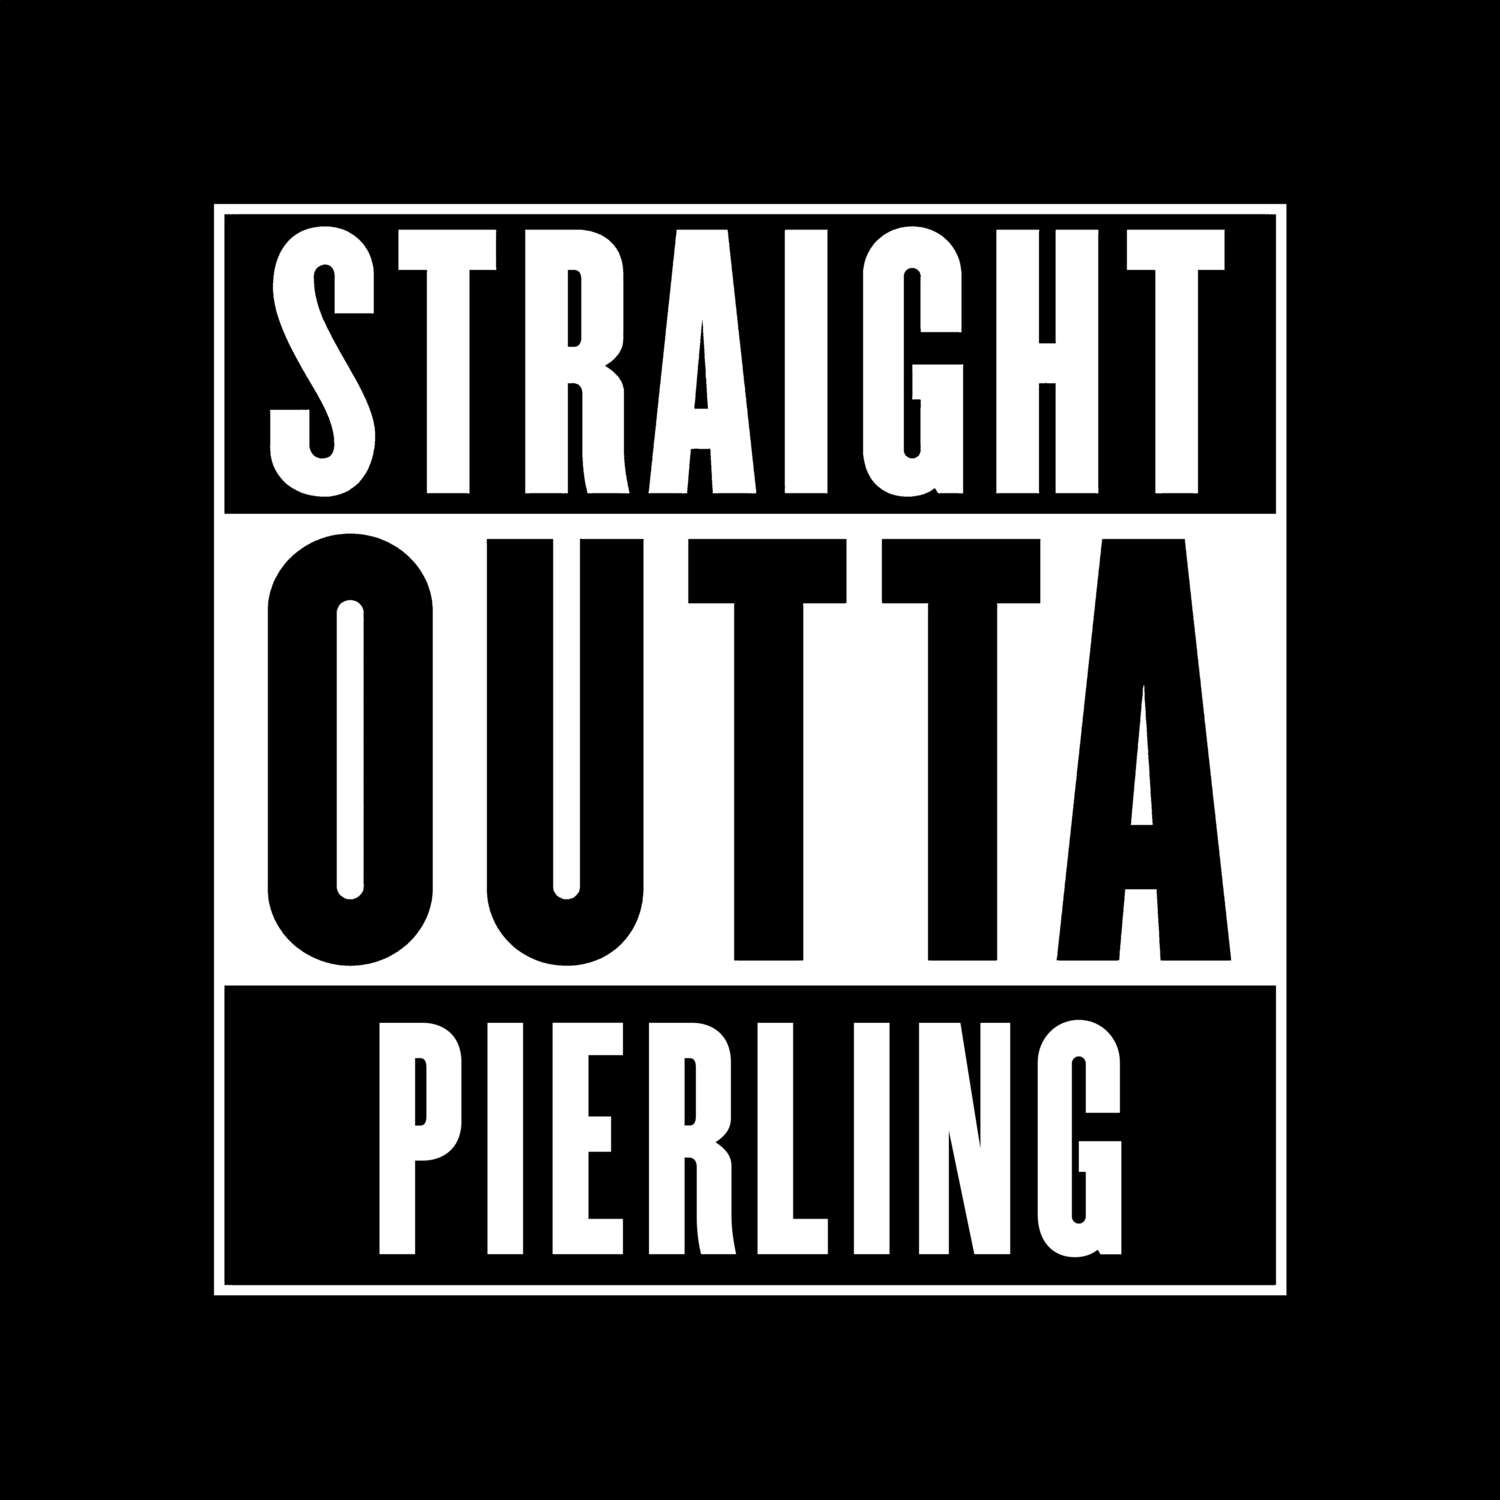 Pierling T-Shirt »Straight Outta«